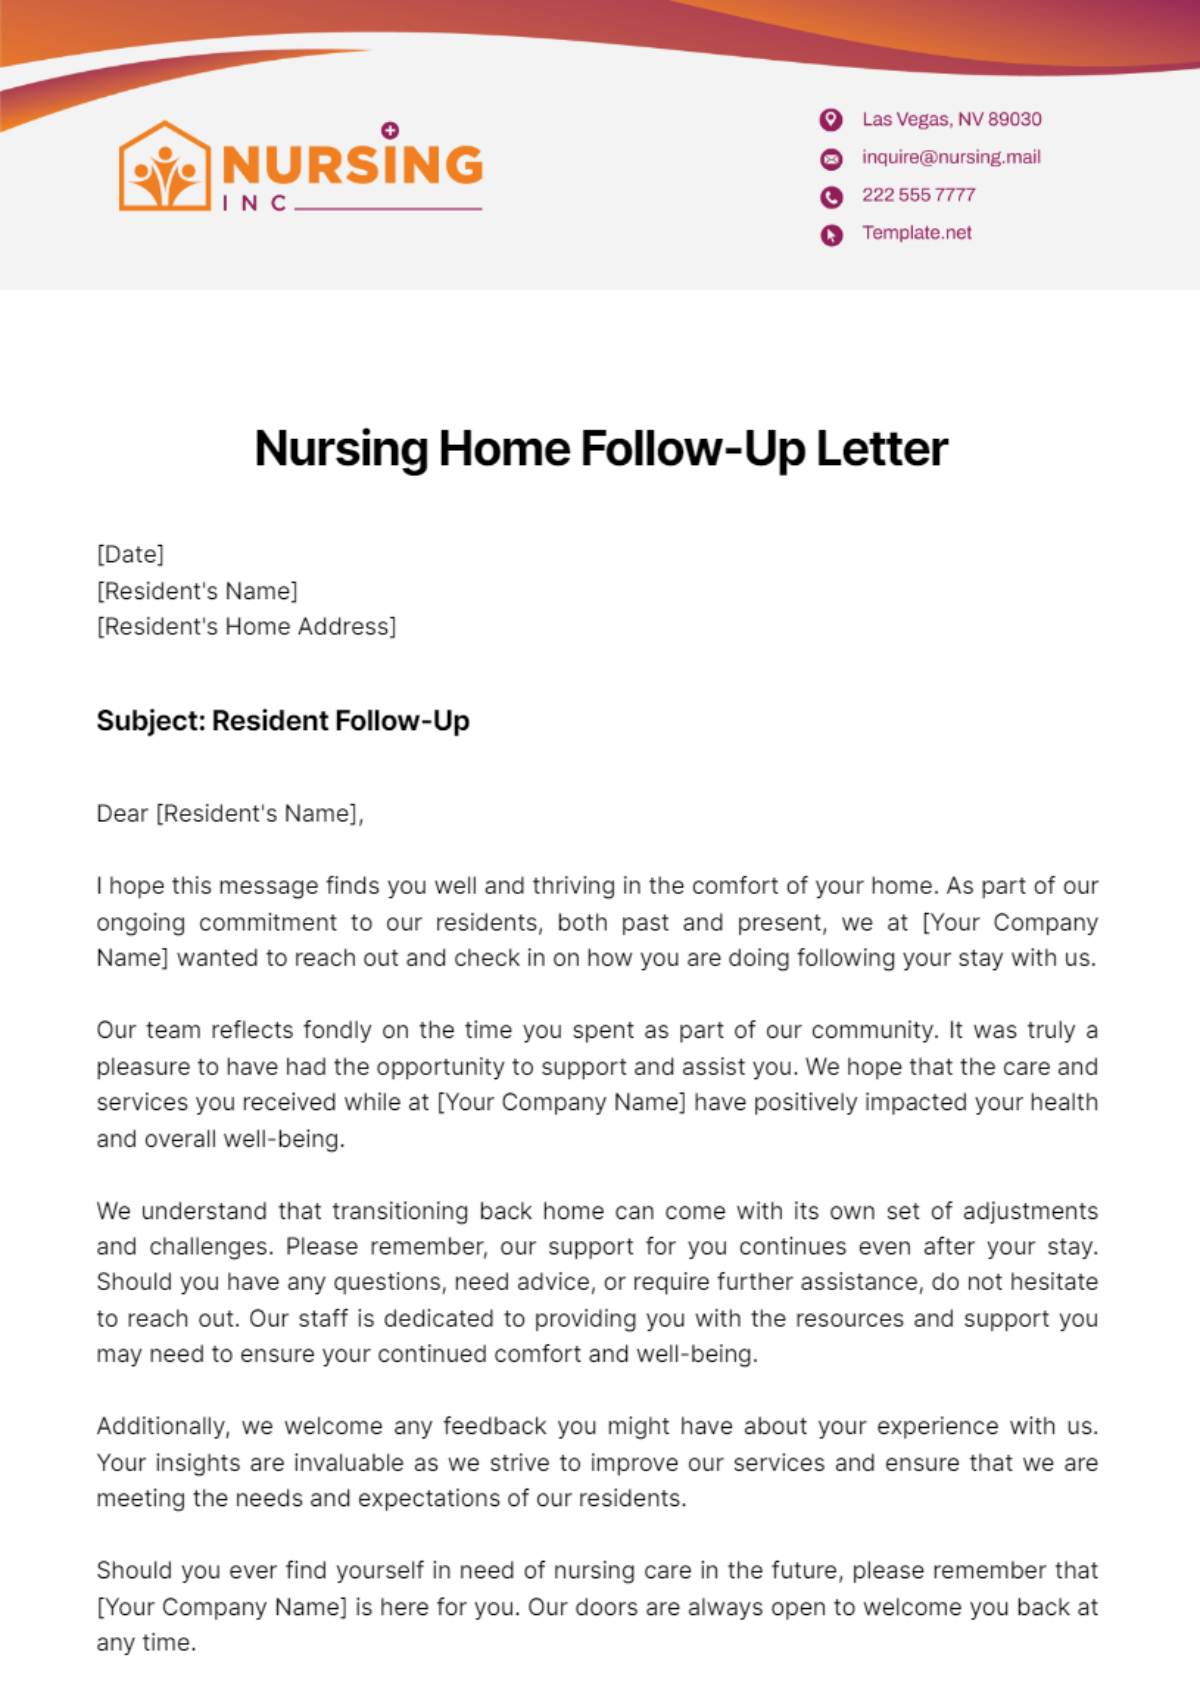 Nursing Home Follow-Up Letter Template